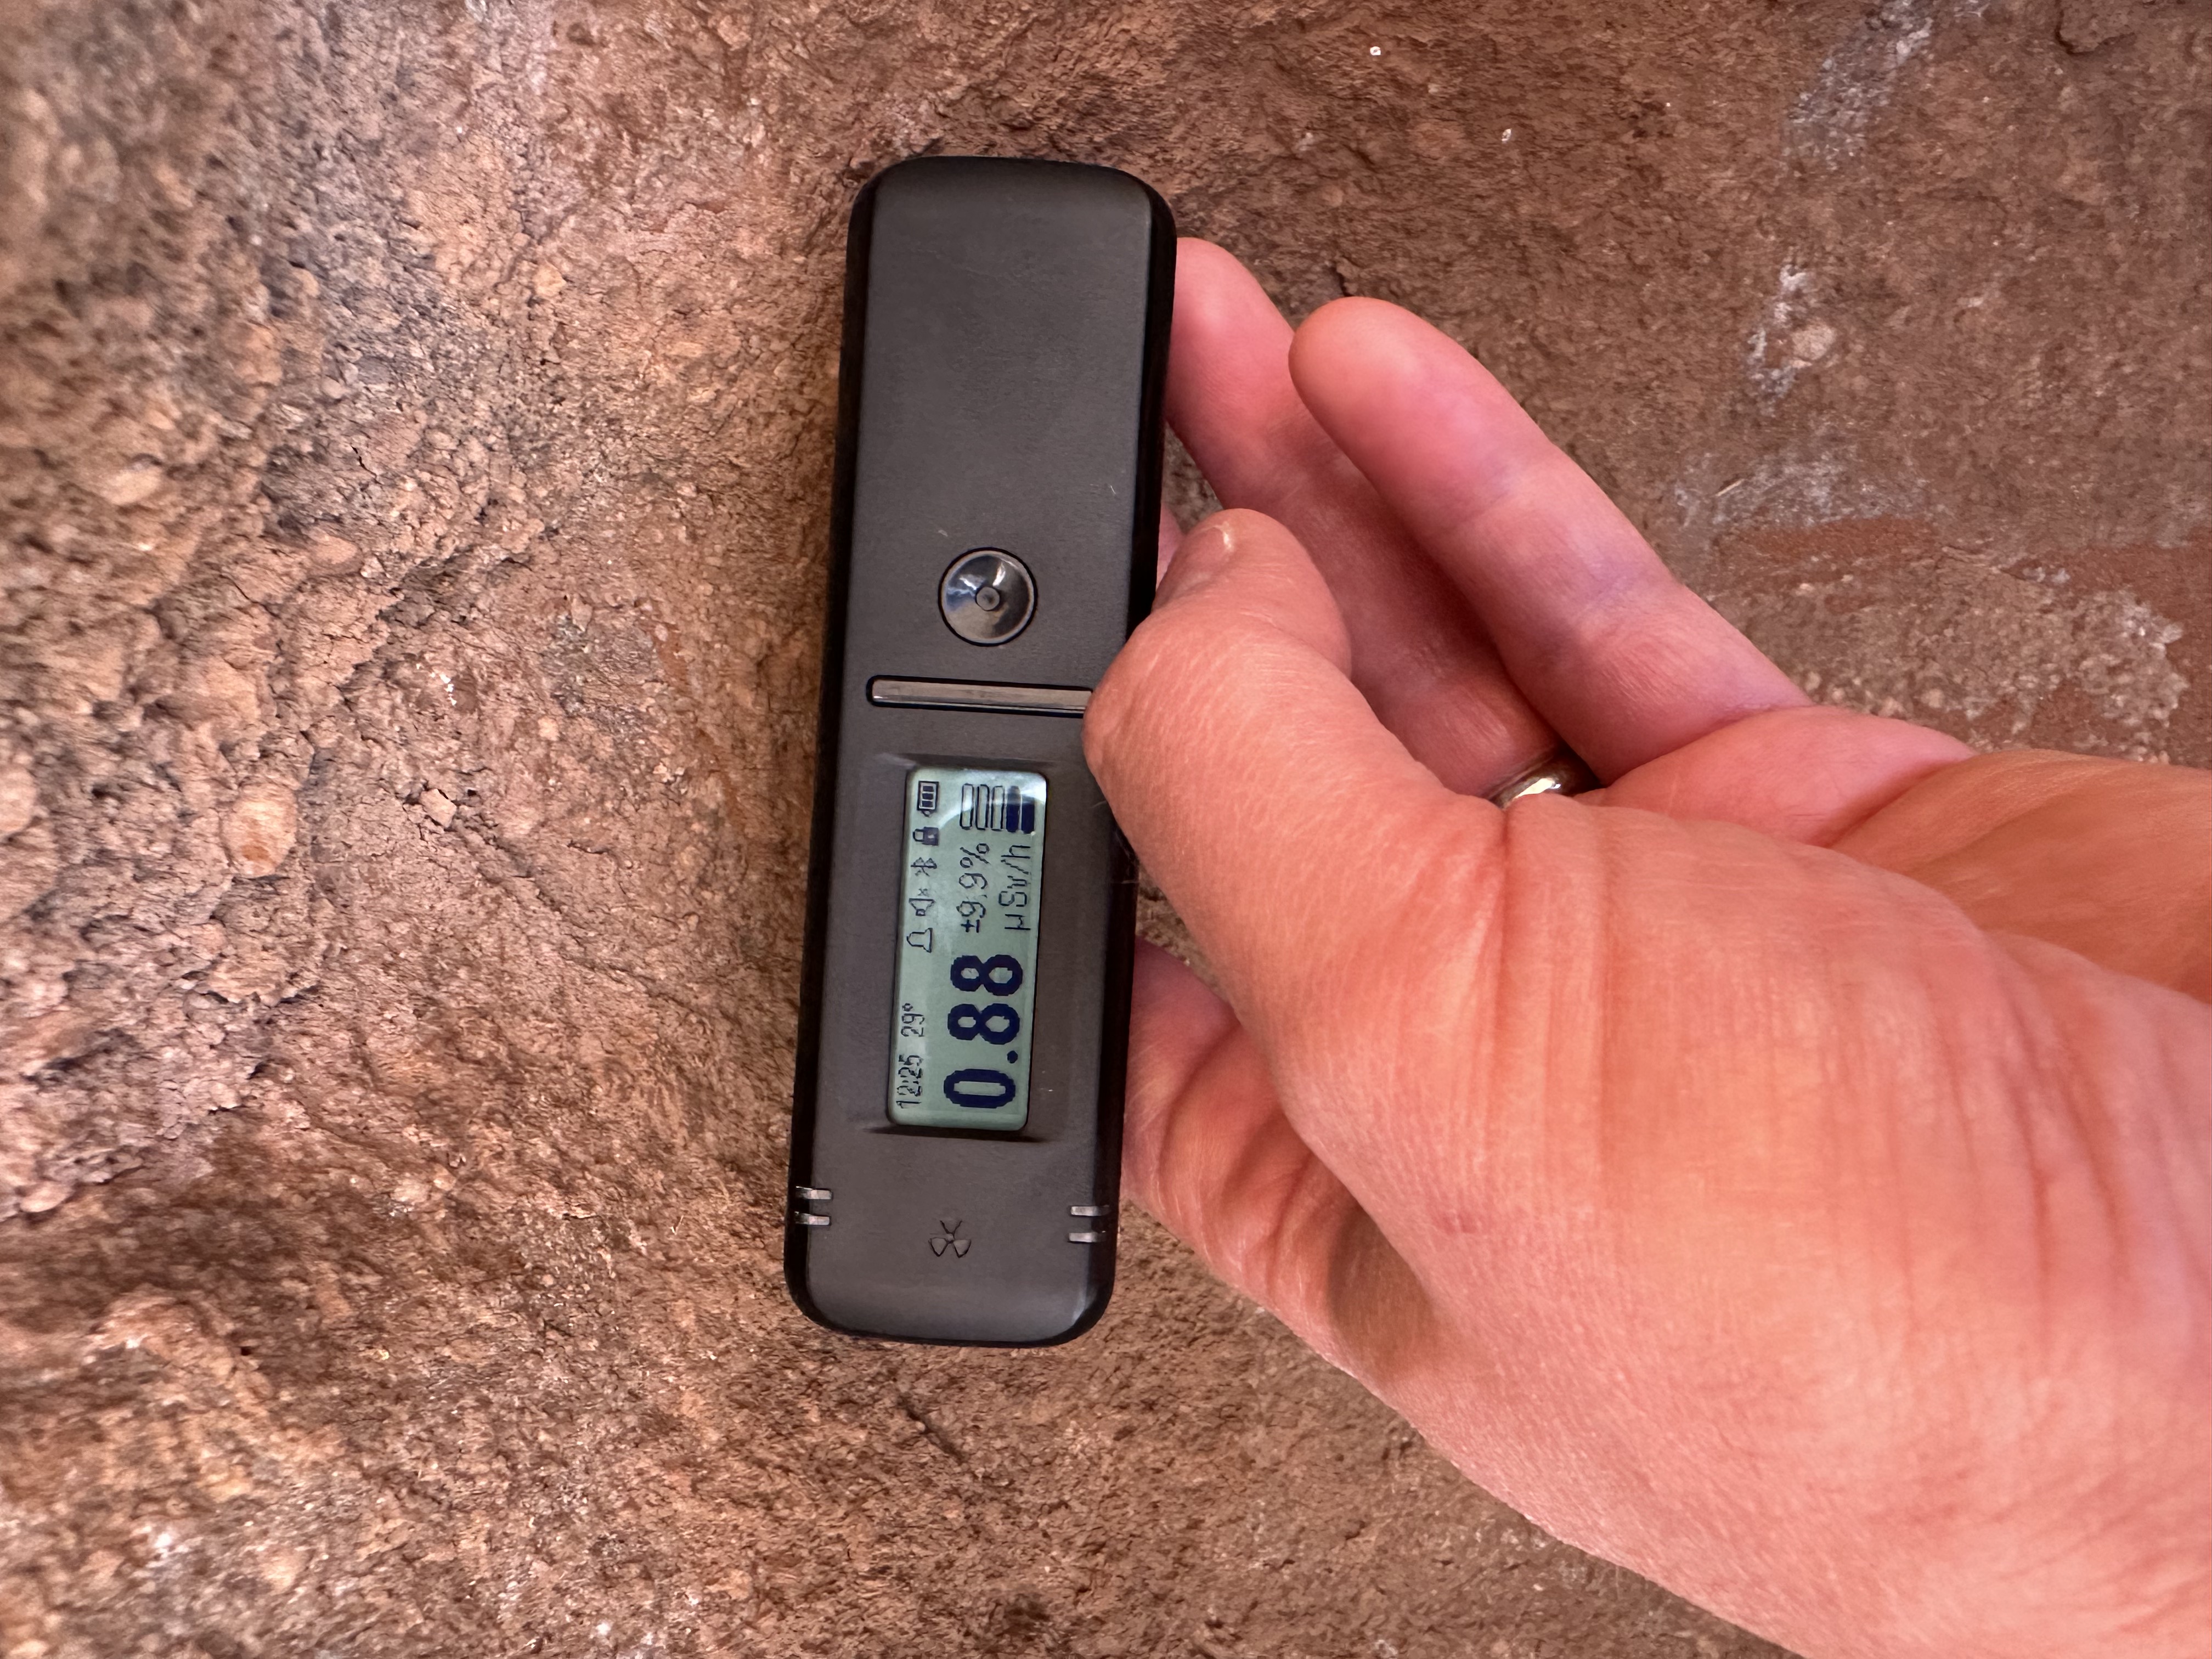 Radiacode 101 showing the dose next to Uluru / Ayer's Rock